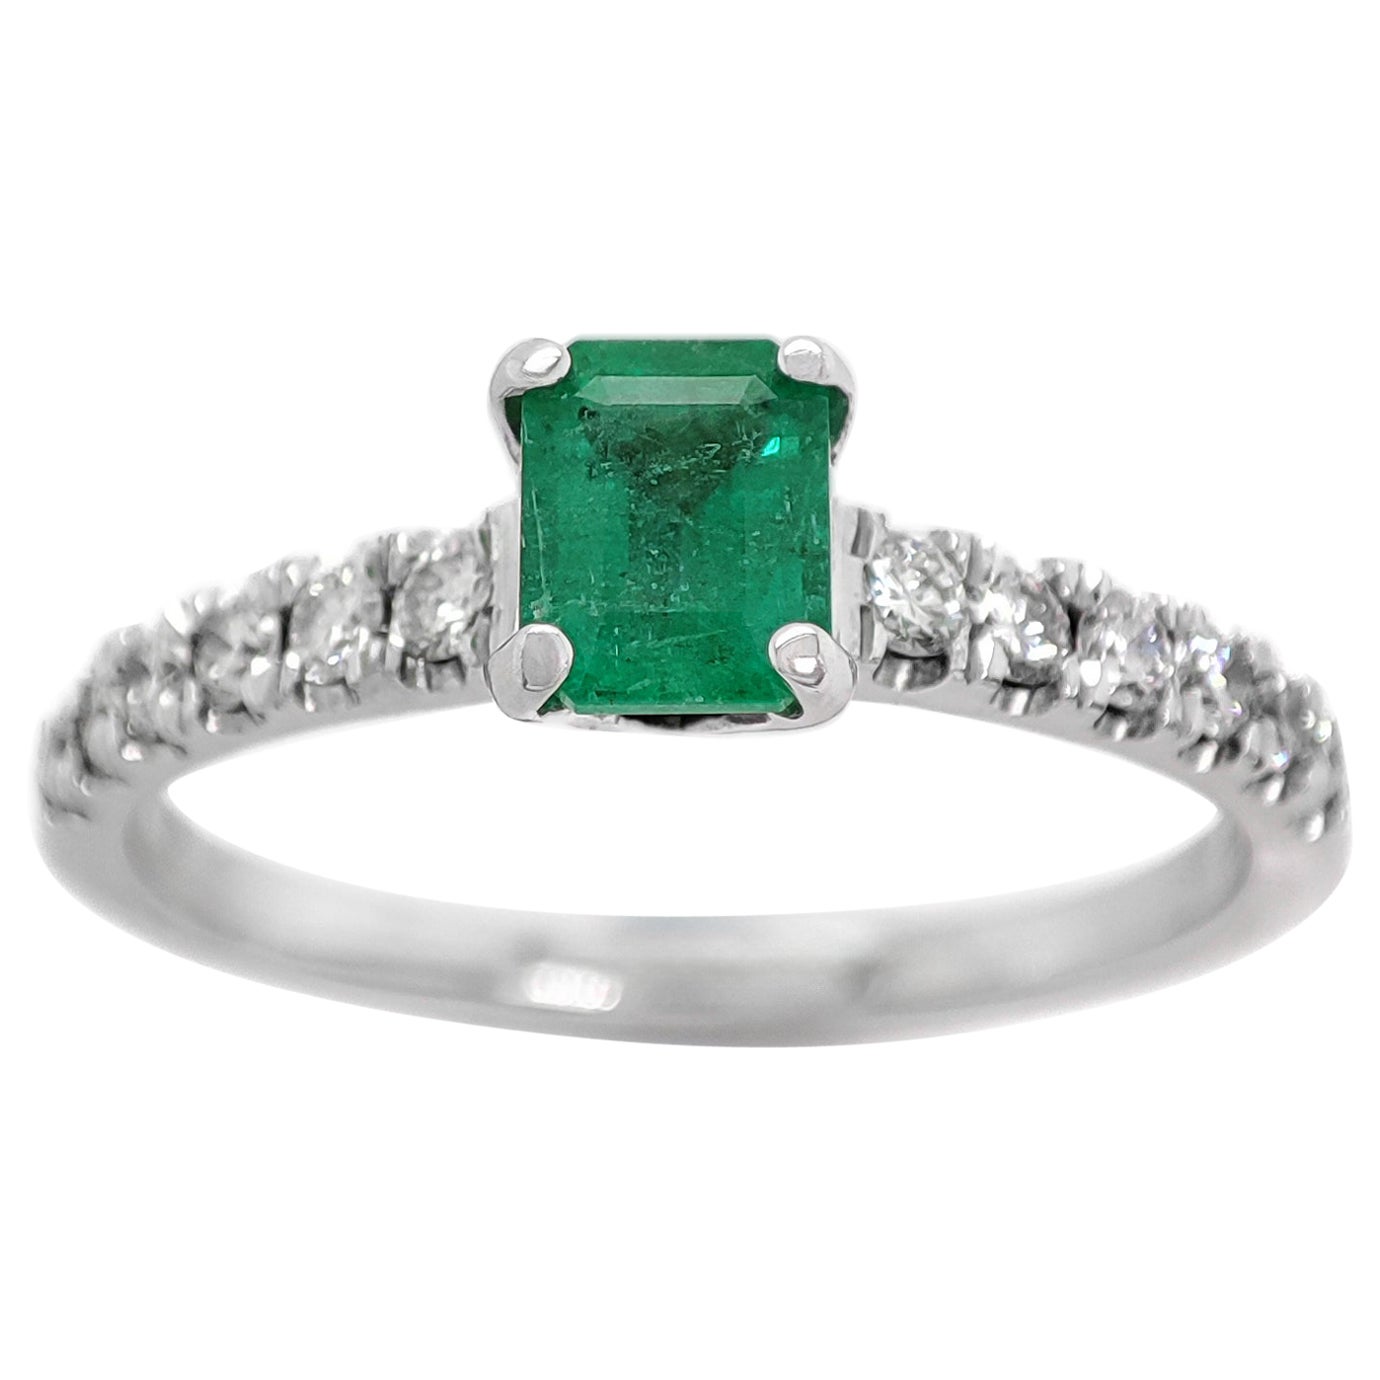 Low Cost Luxury 14K 0.28 Ct Diamond & Emerald Ring 44706 - Diamond Gallery